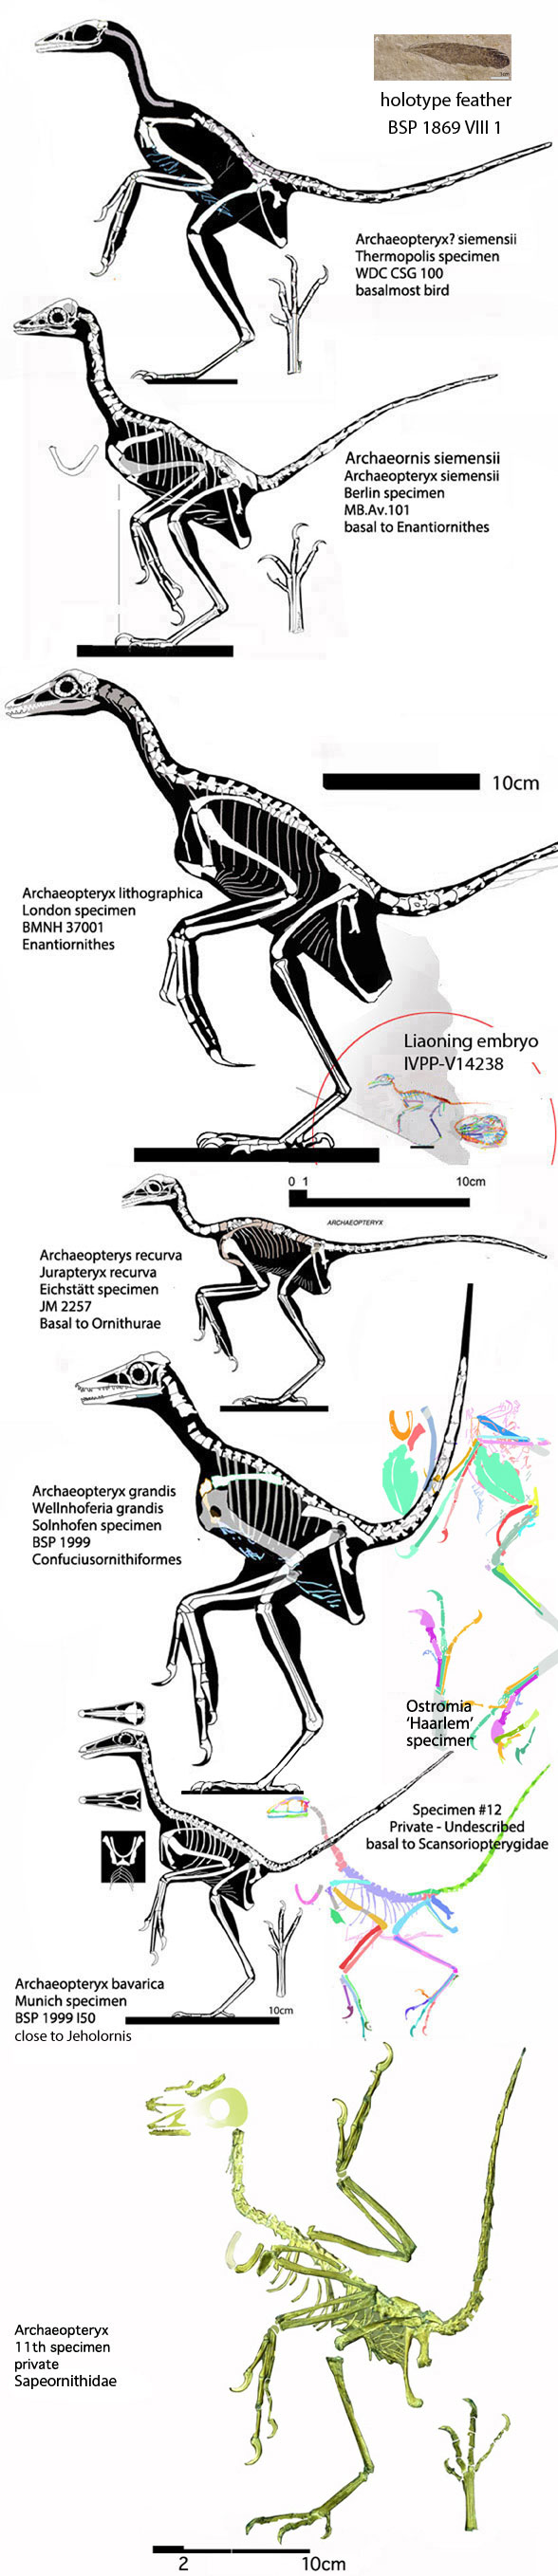 Archaeopteryx specimens